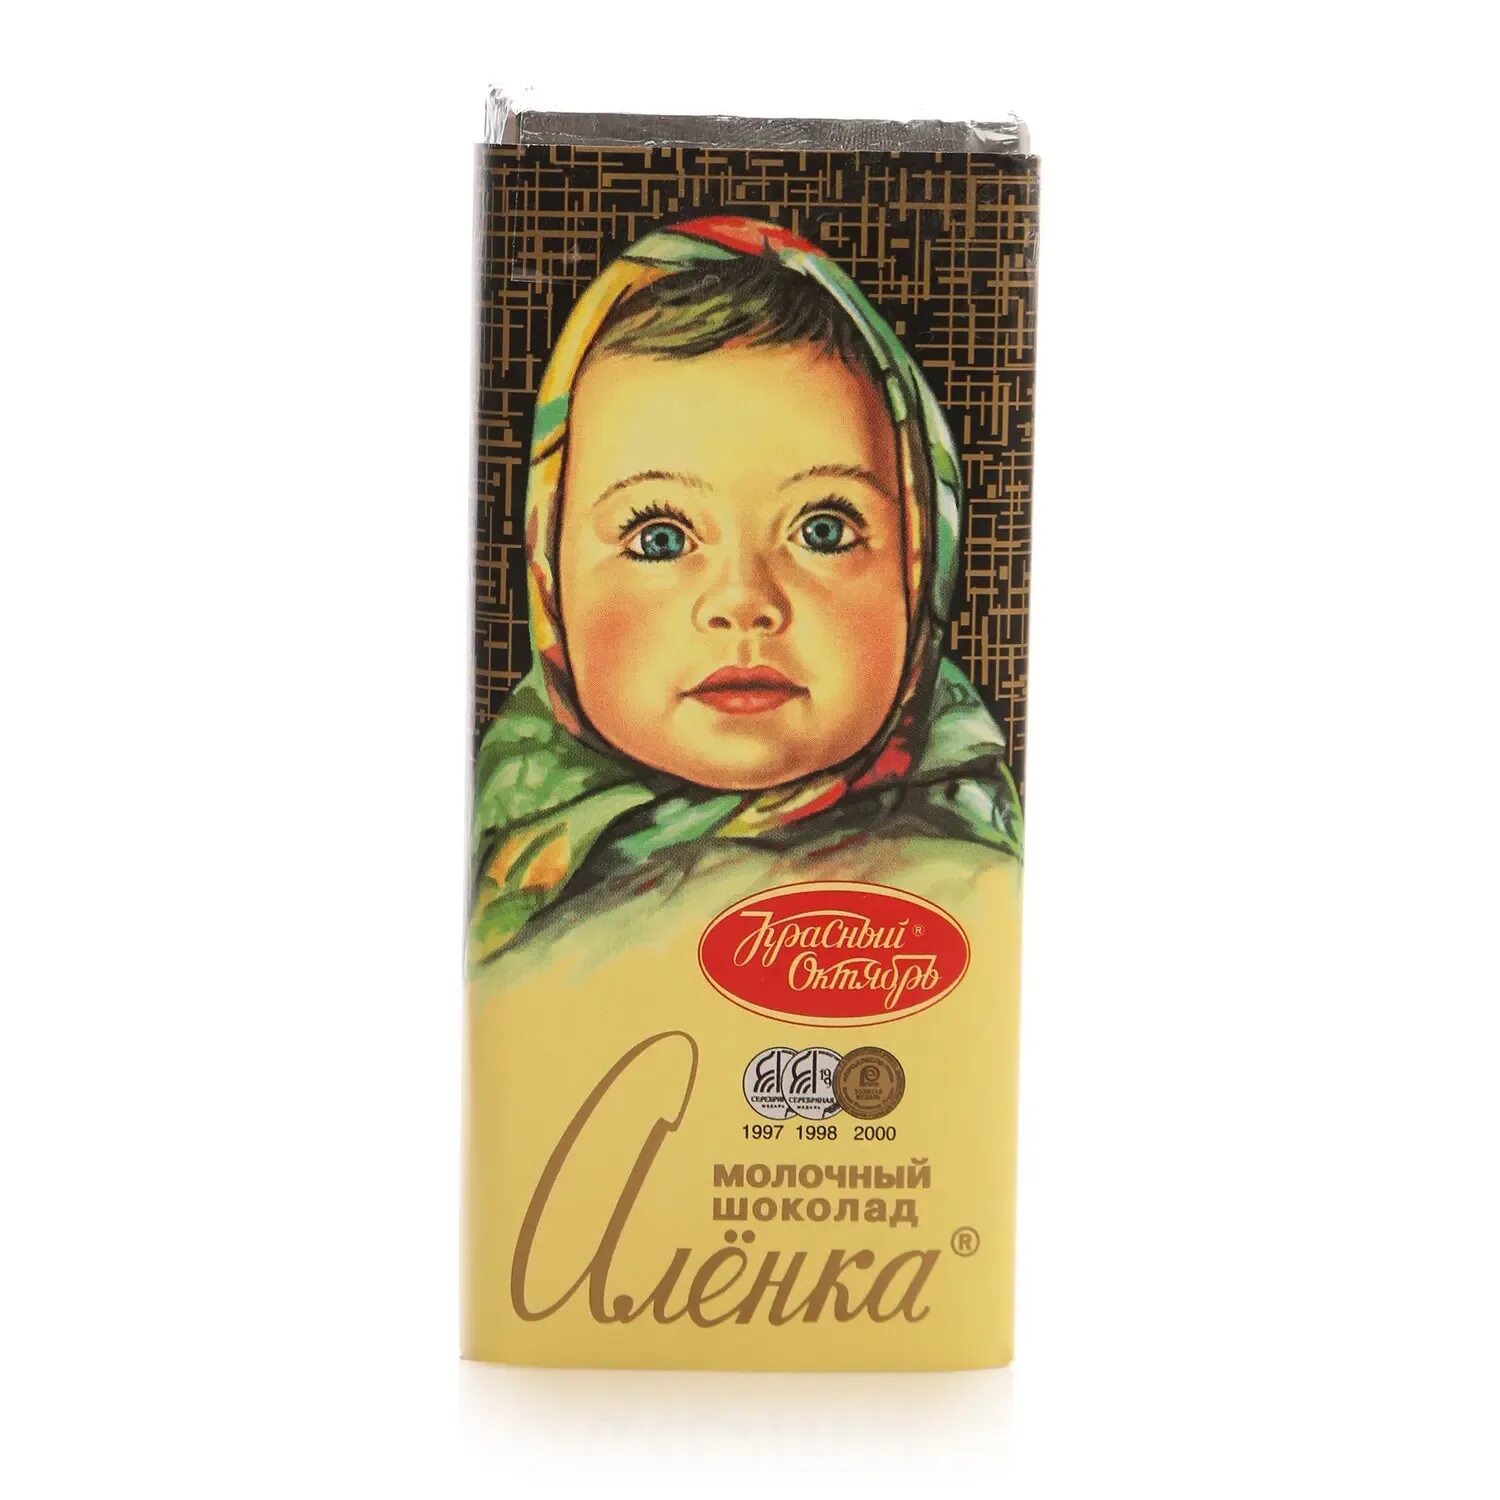 Шоколадка Аленка. Шоколад алёнка молочный 200г 18шт. Фабрика шоколад Аленка шоколад. Шоколад Аленка бренд.